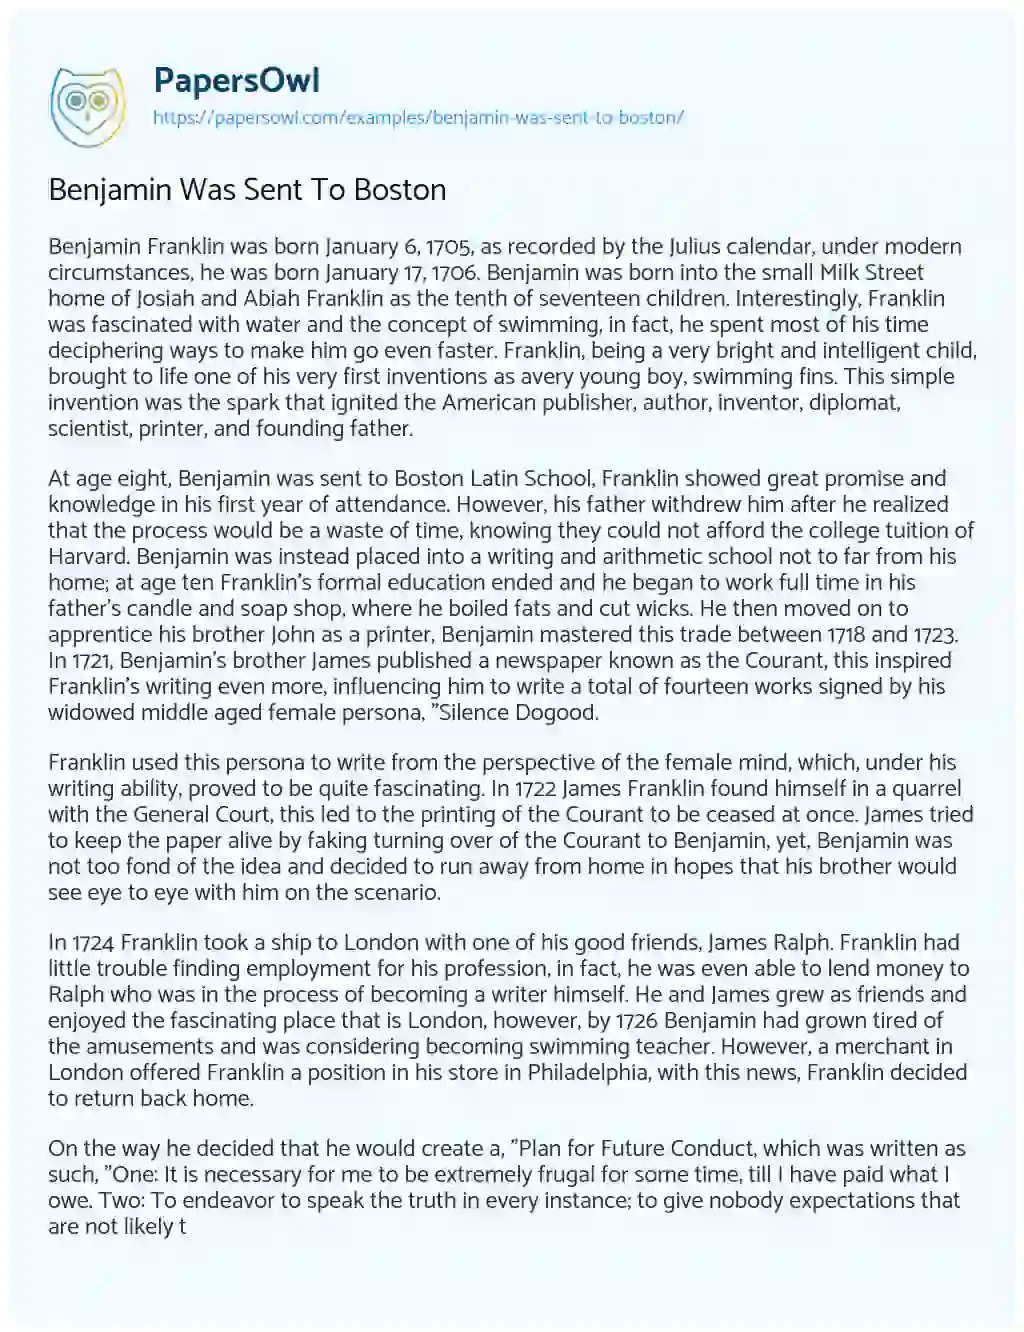 Benjamin was Sent to Boston essay